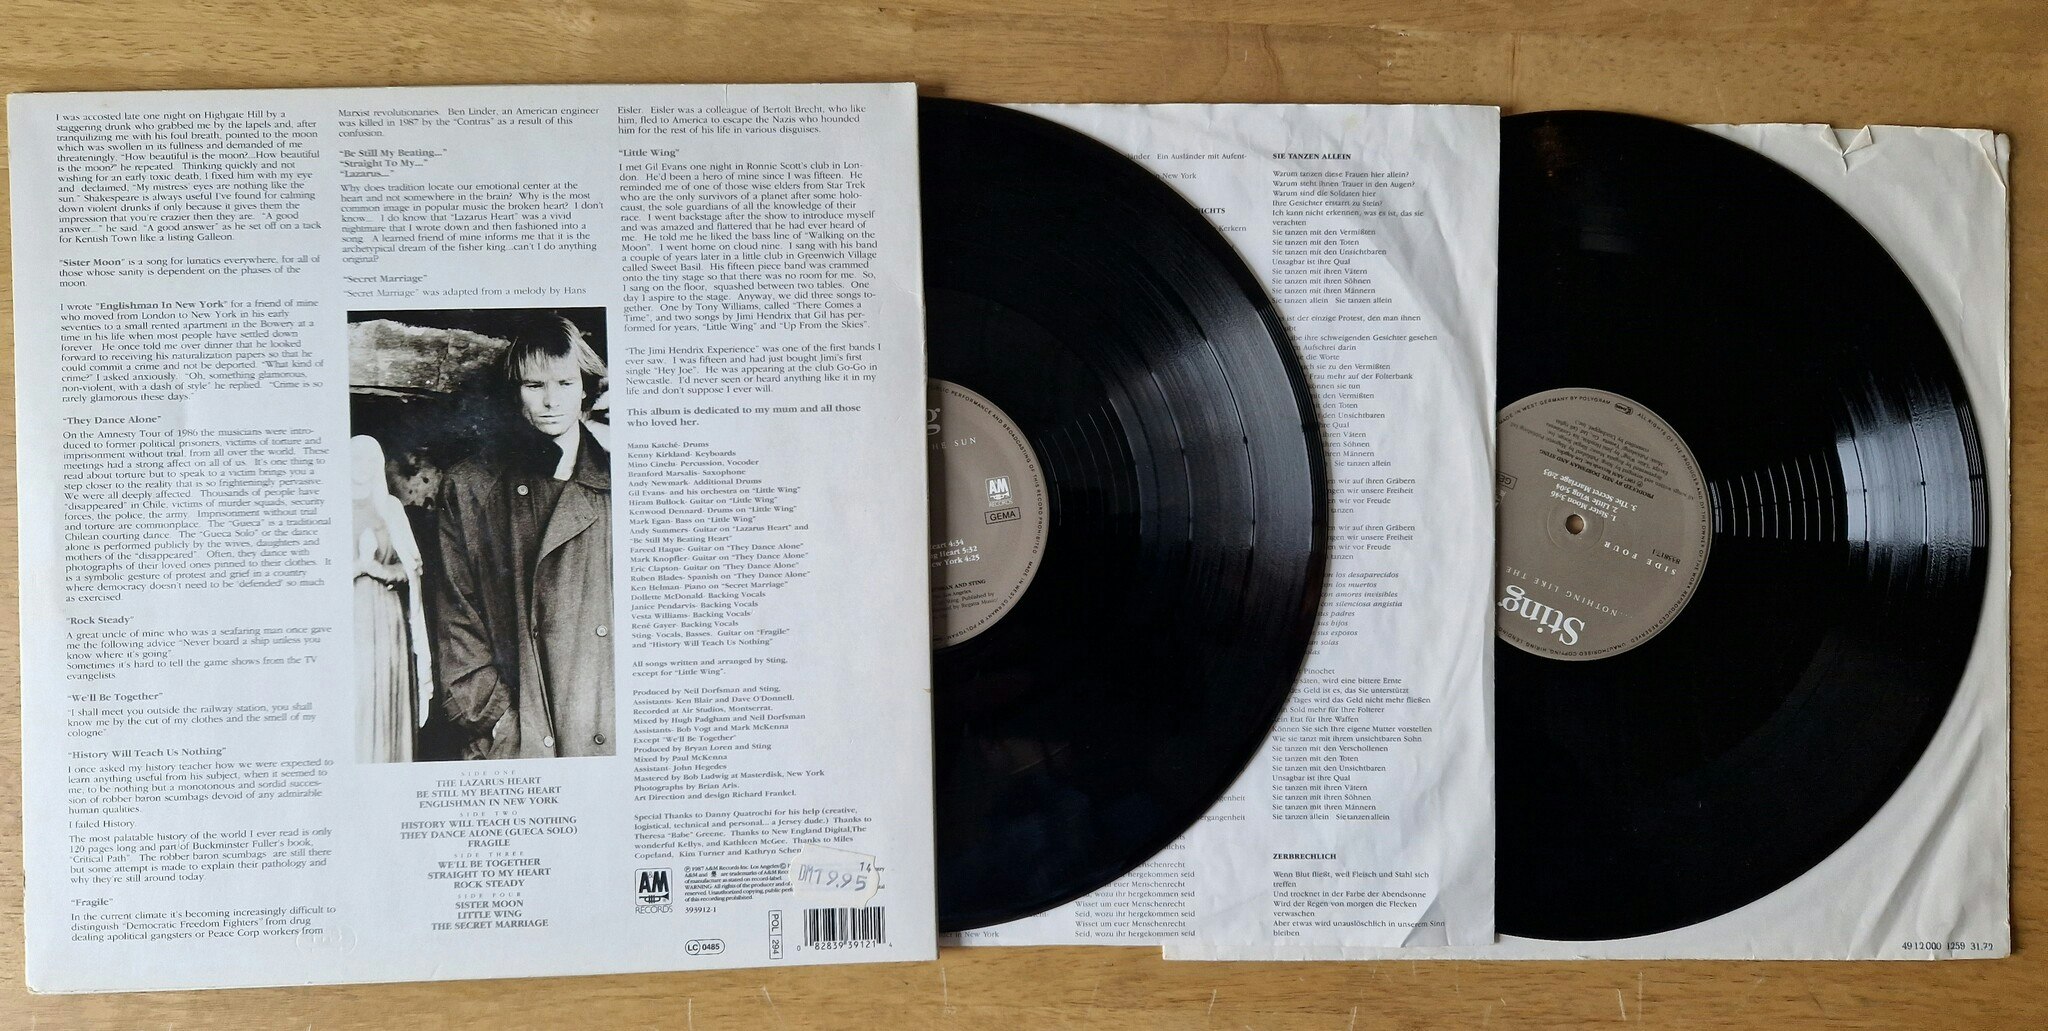 Sting, Nothing like the sun. Vinyl 2LP